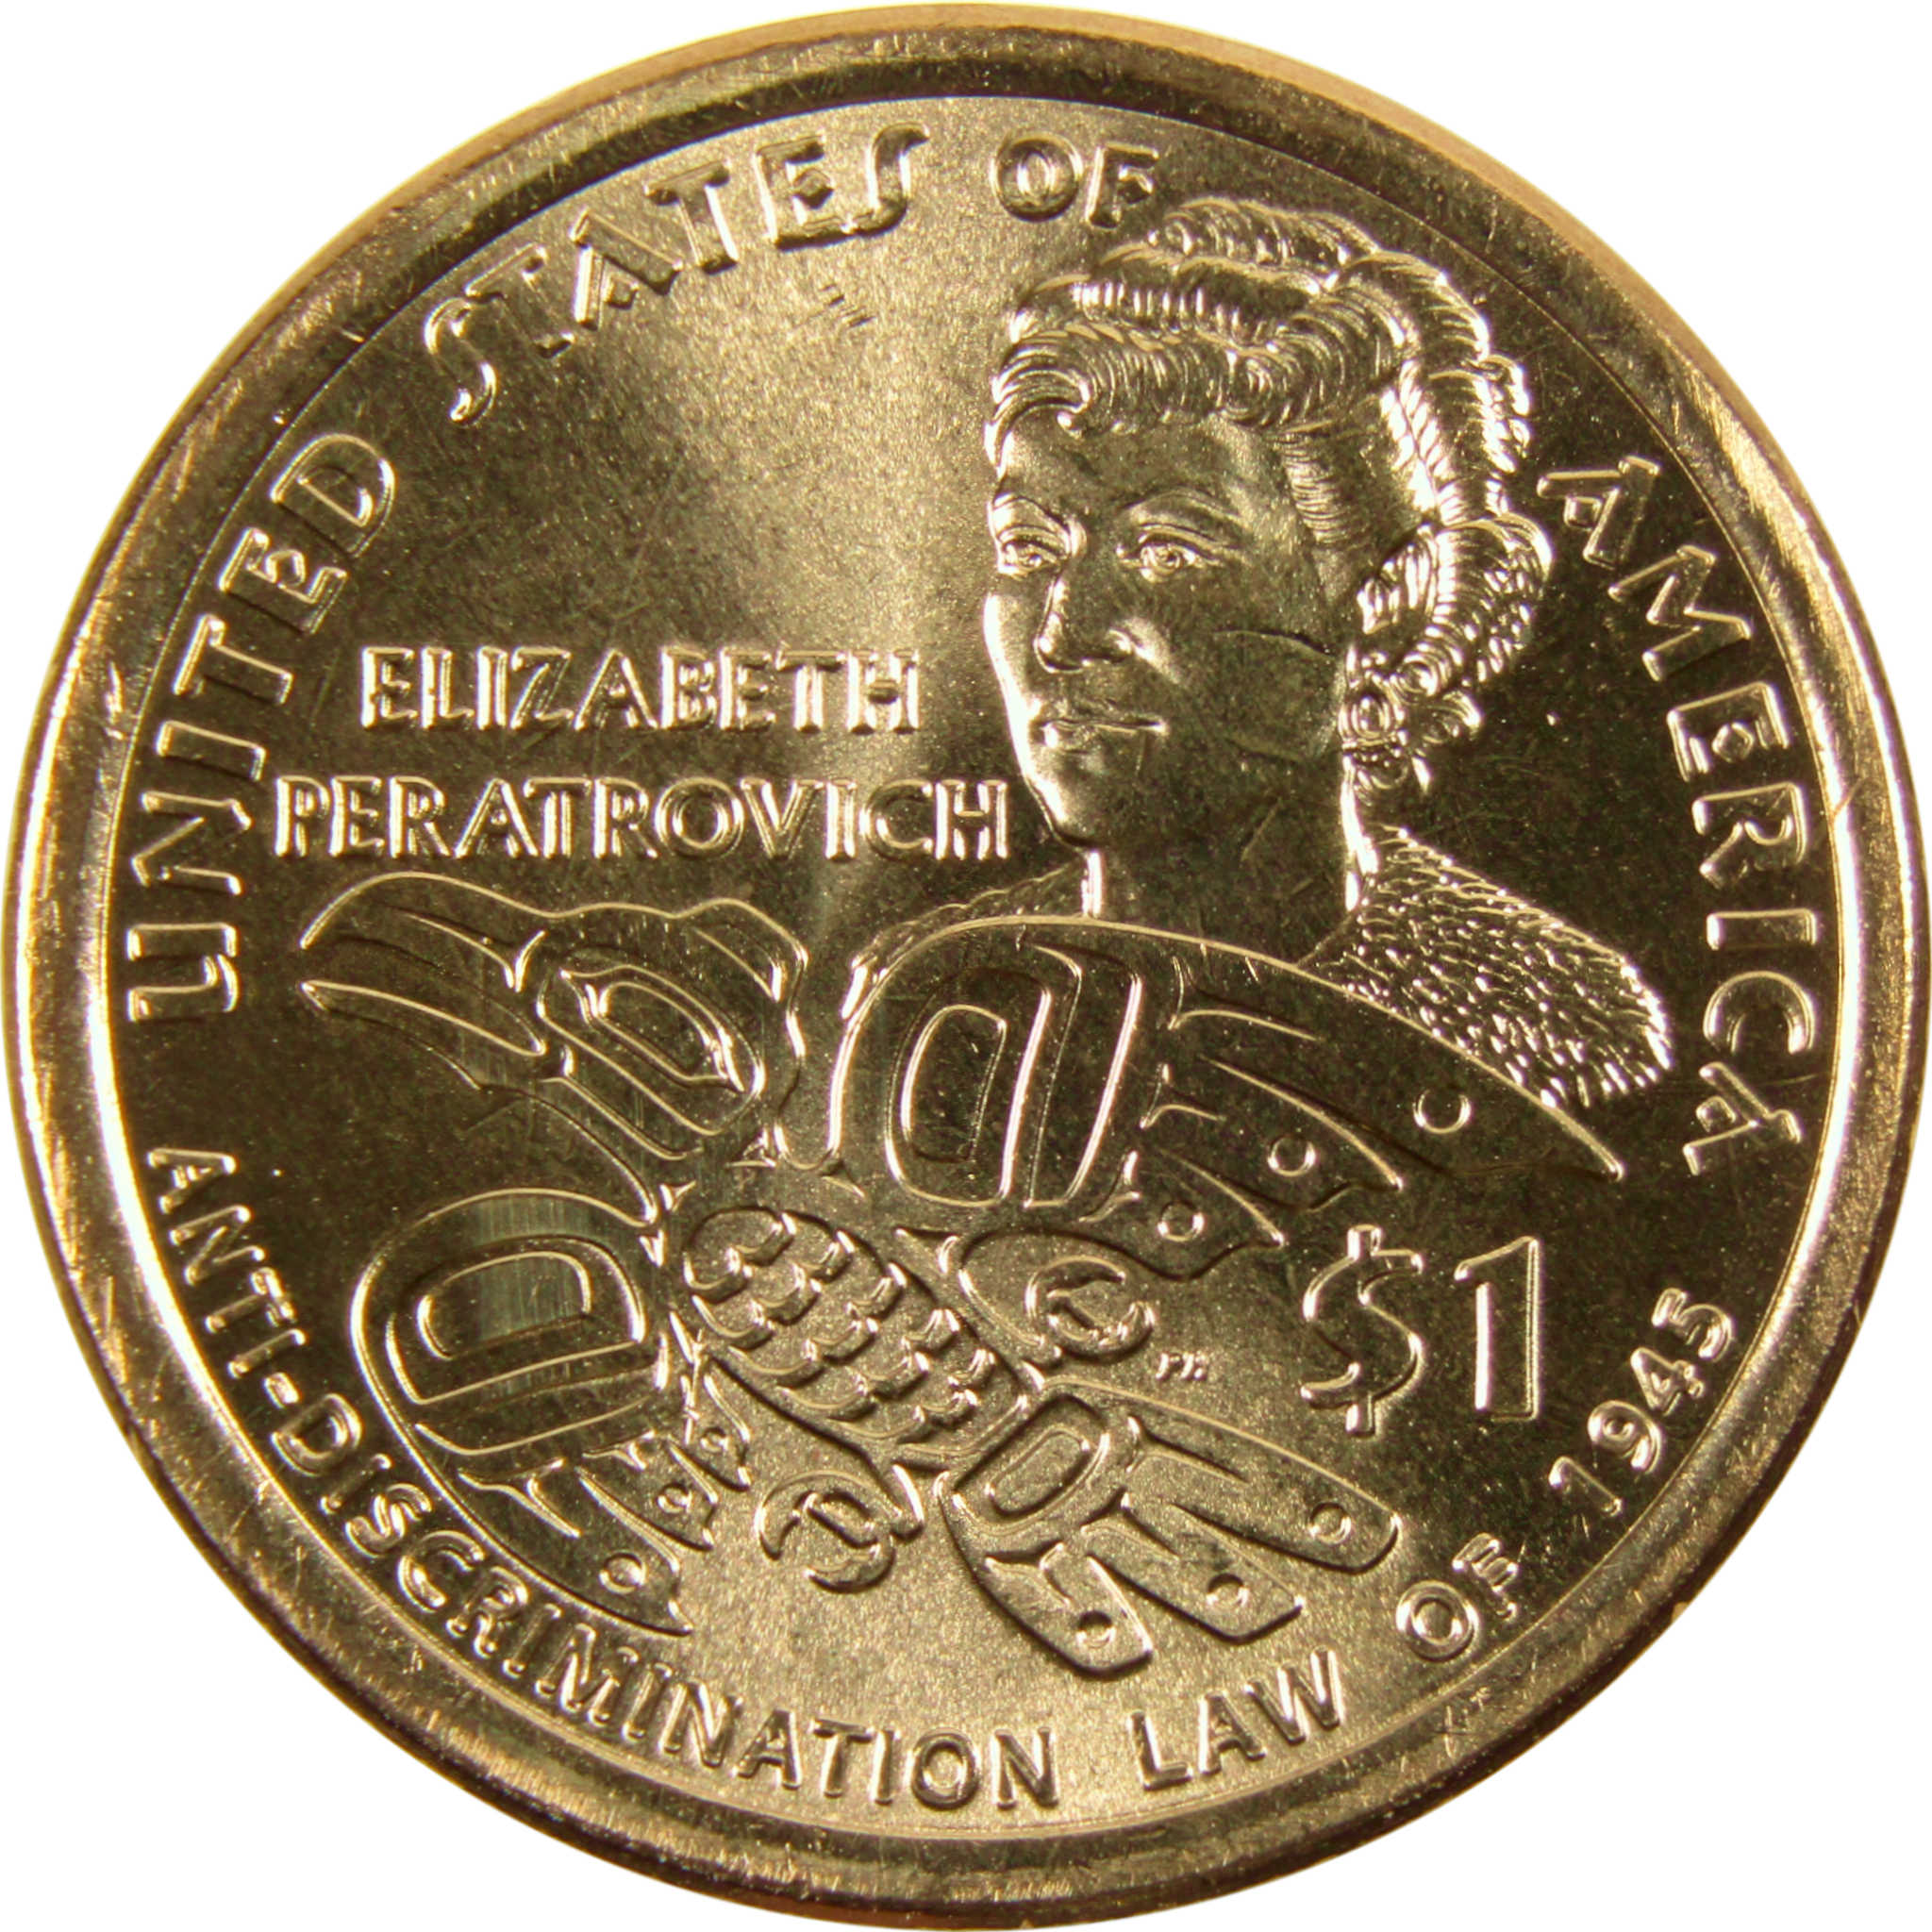 2020 D Elizabeth Peratrovich Native American Dollar BU Uncirculated $1